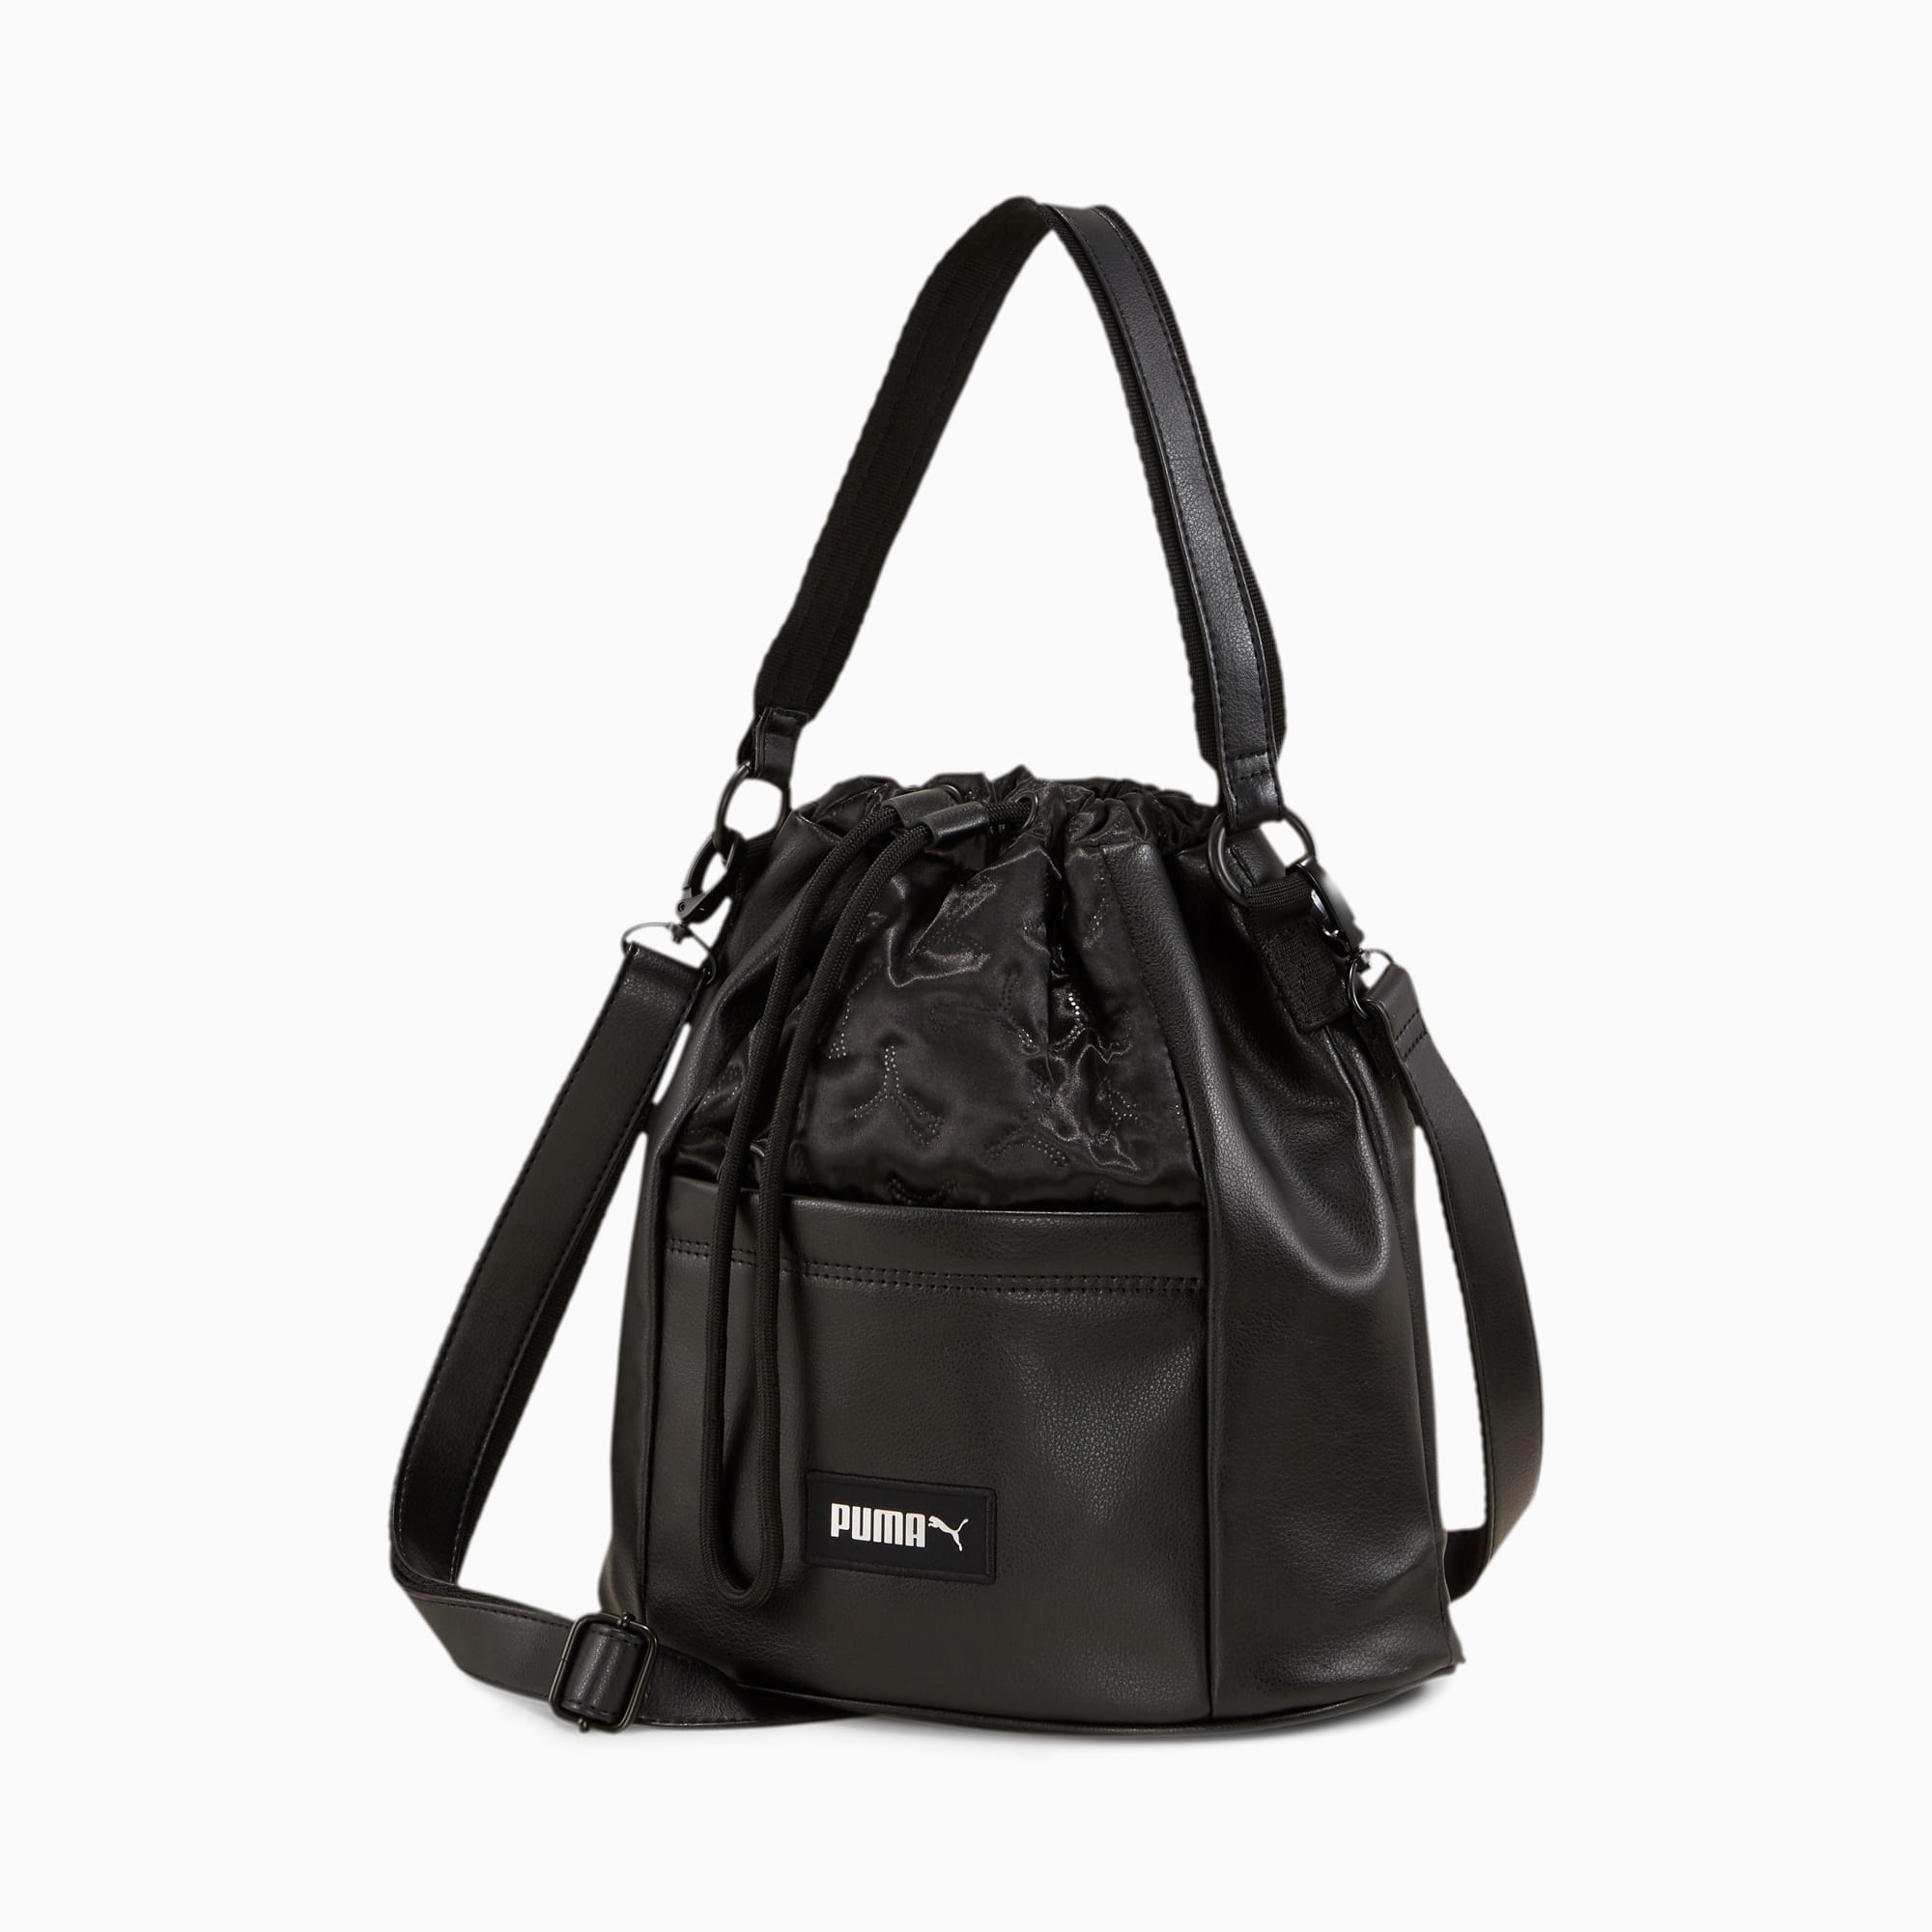 puma black handbag